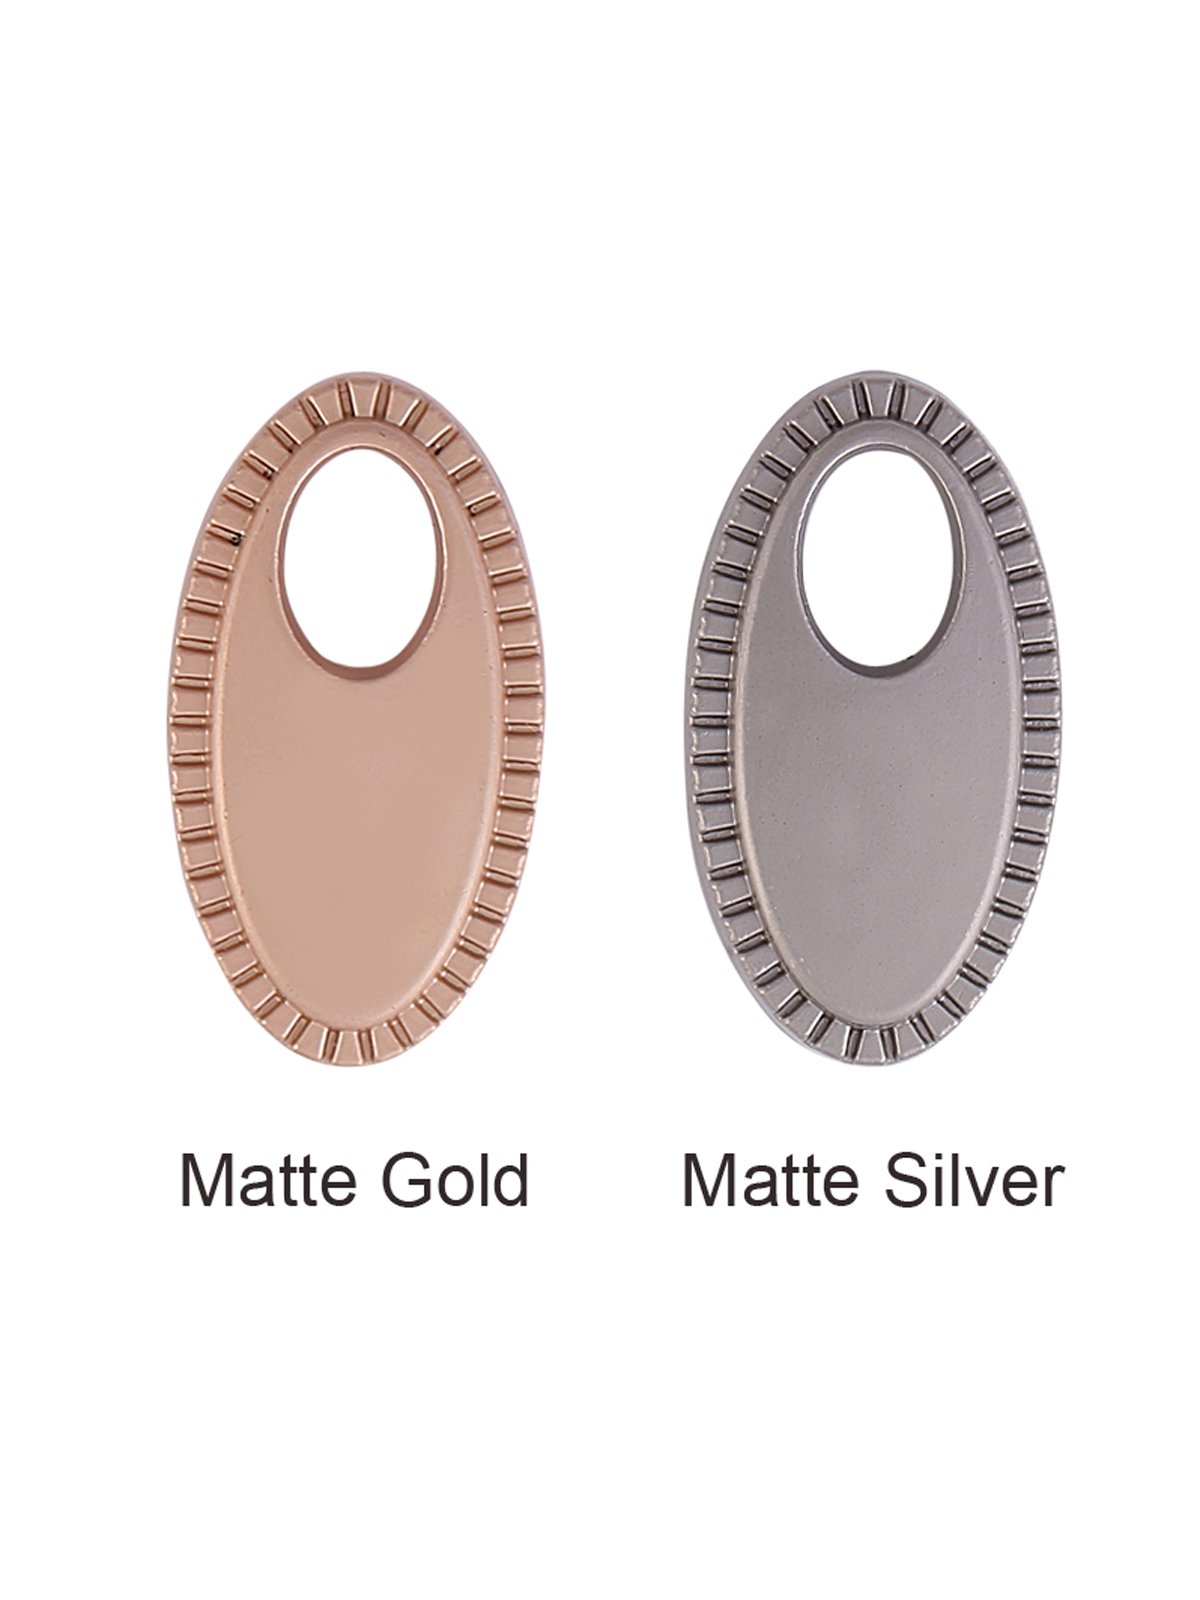 Exquisite Matte Finish Oval Shape Fancy Metal Button